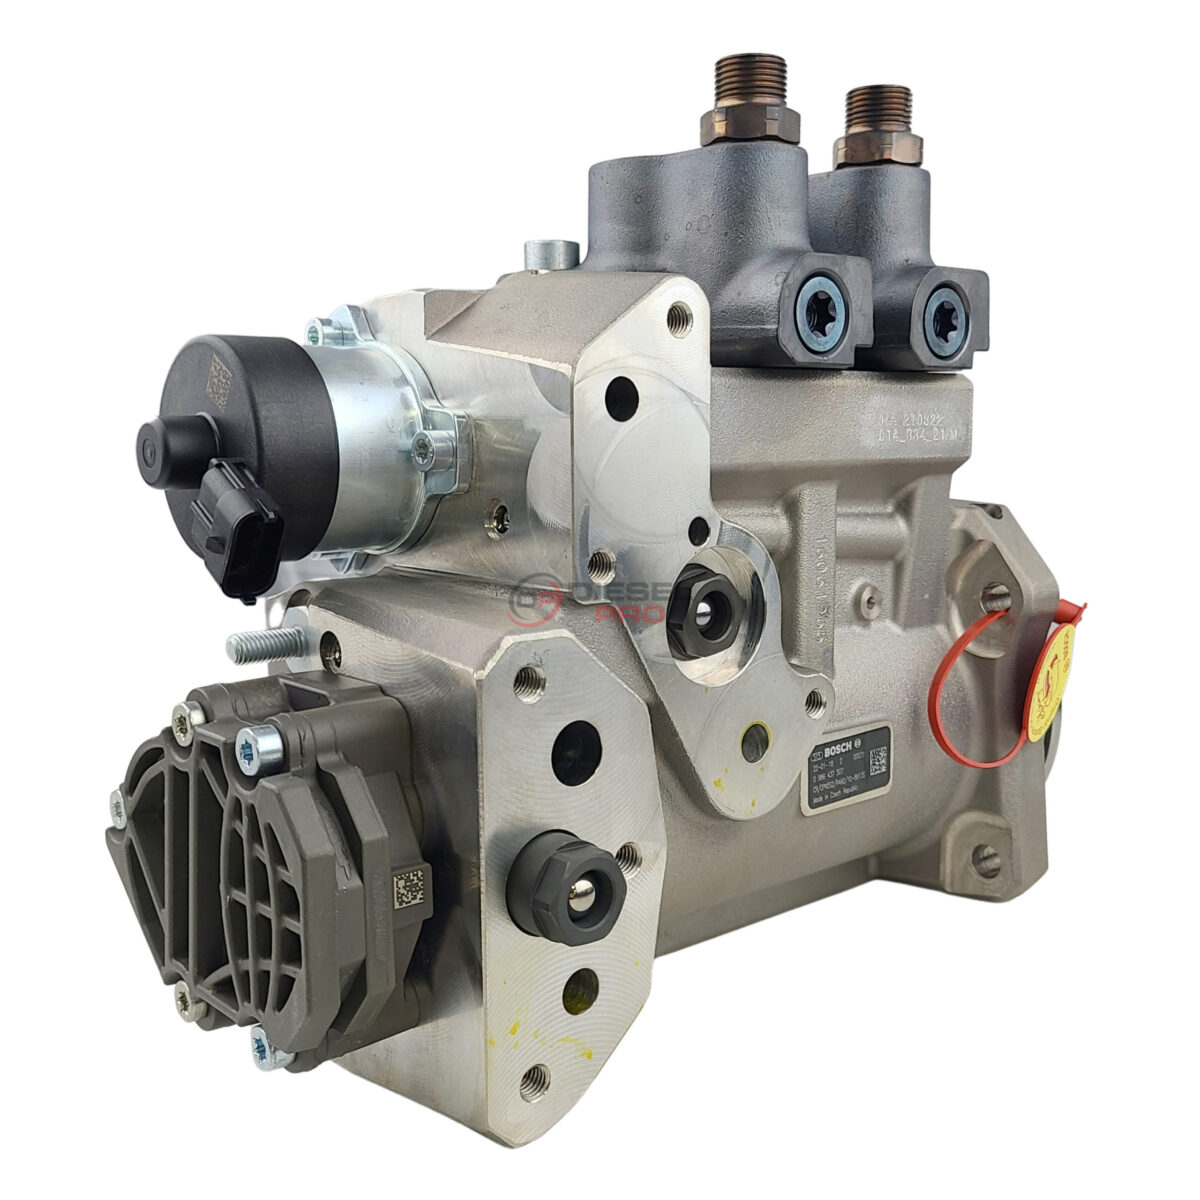 RA4700902150 | Bosch Fuel Pump for Detroit Diesel